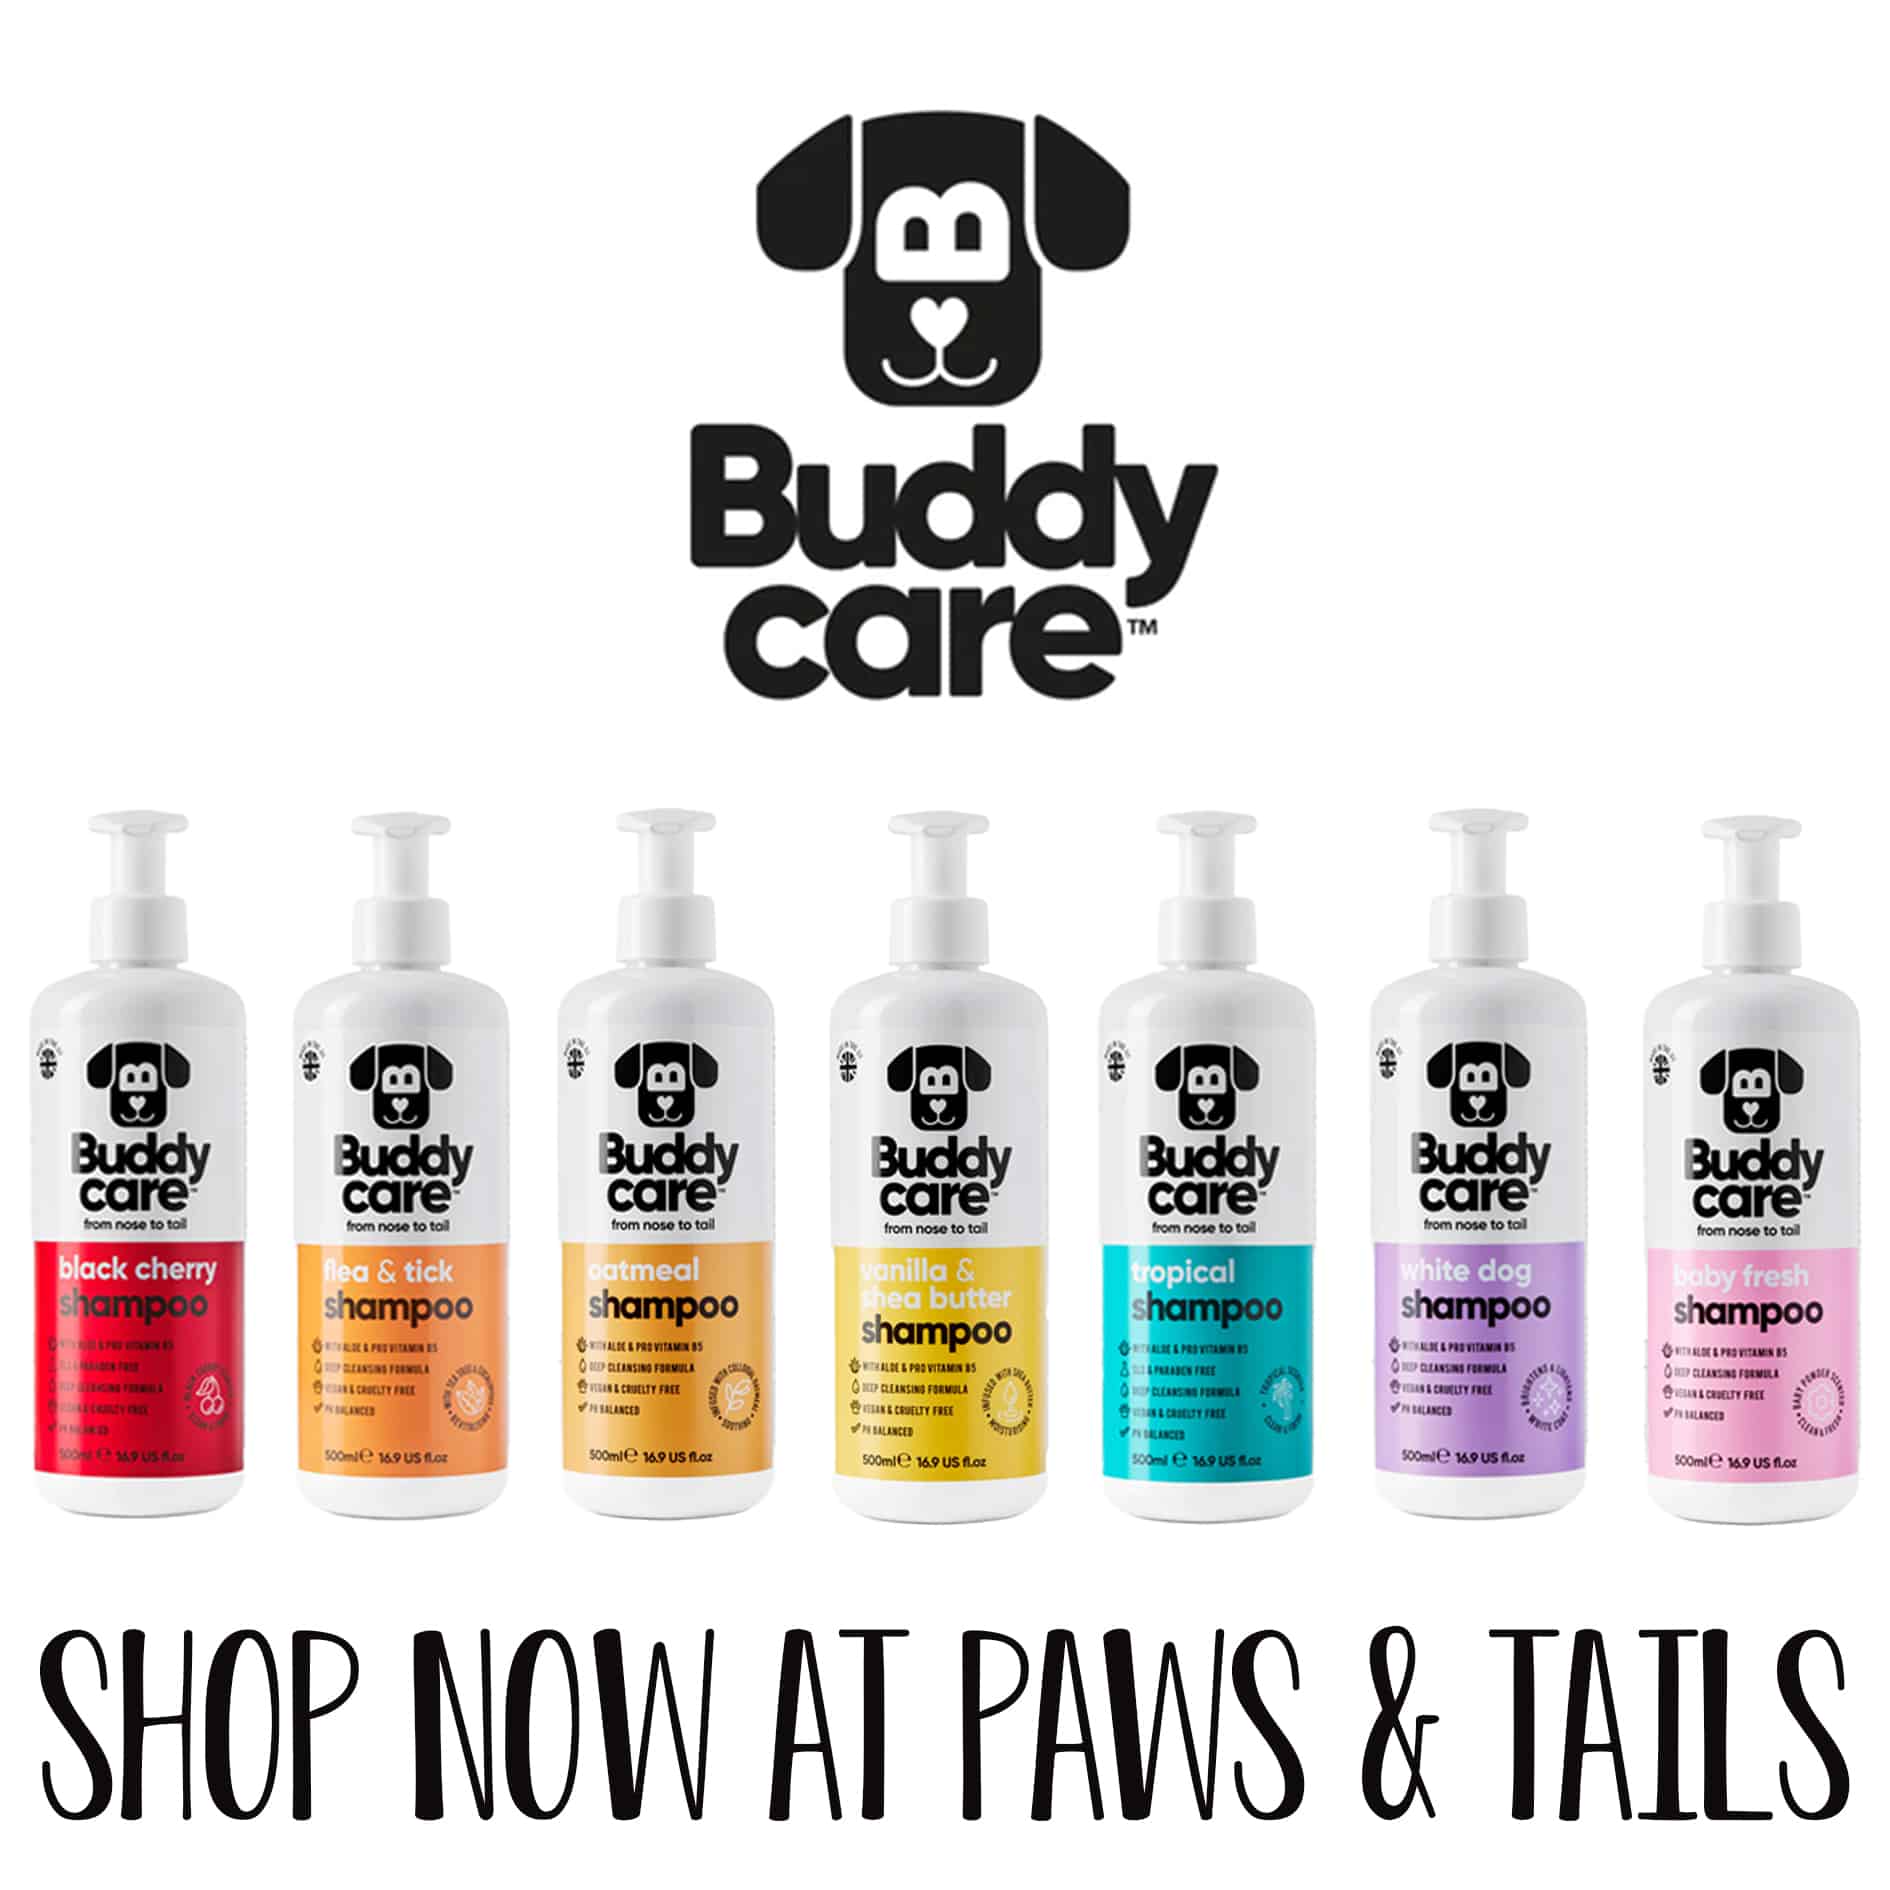 Buddycare - Pawsandtails.pet